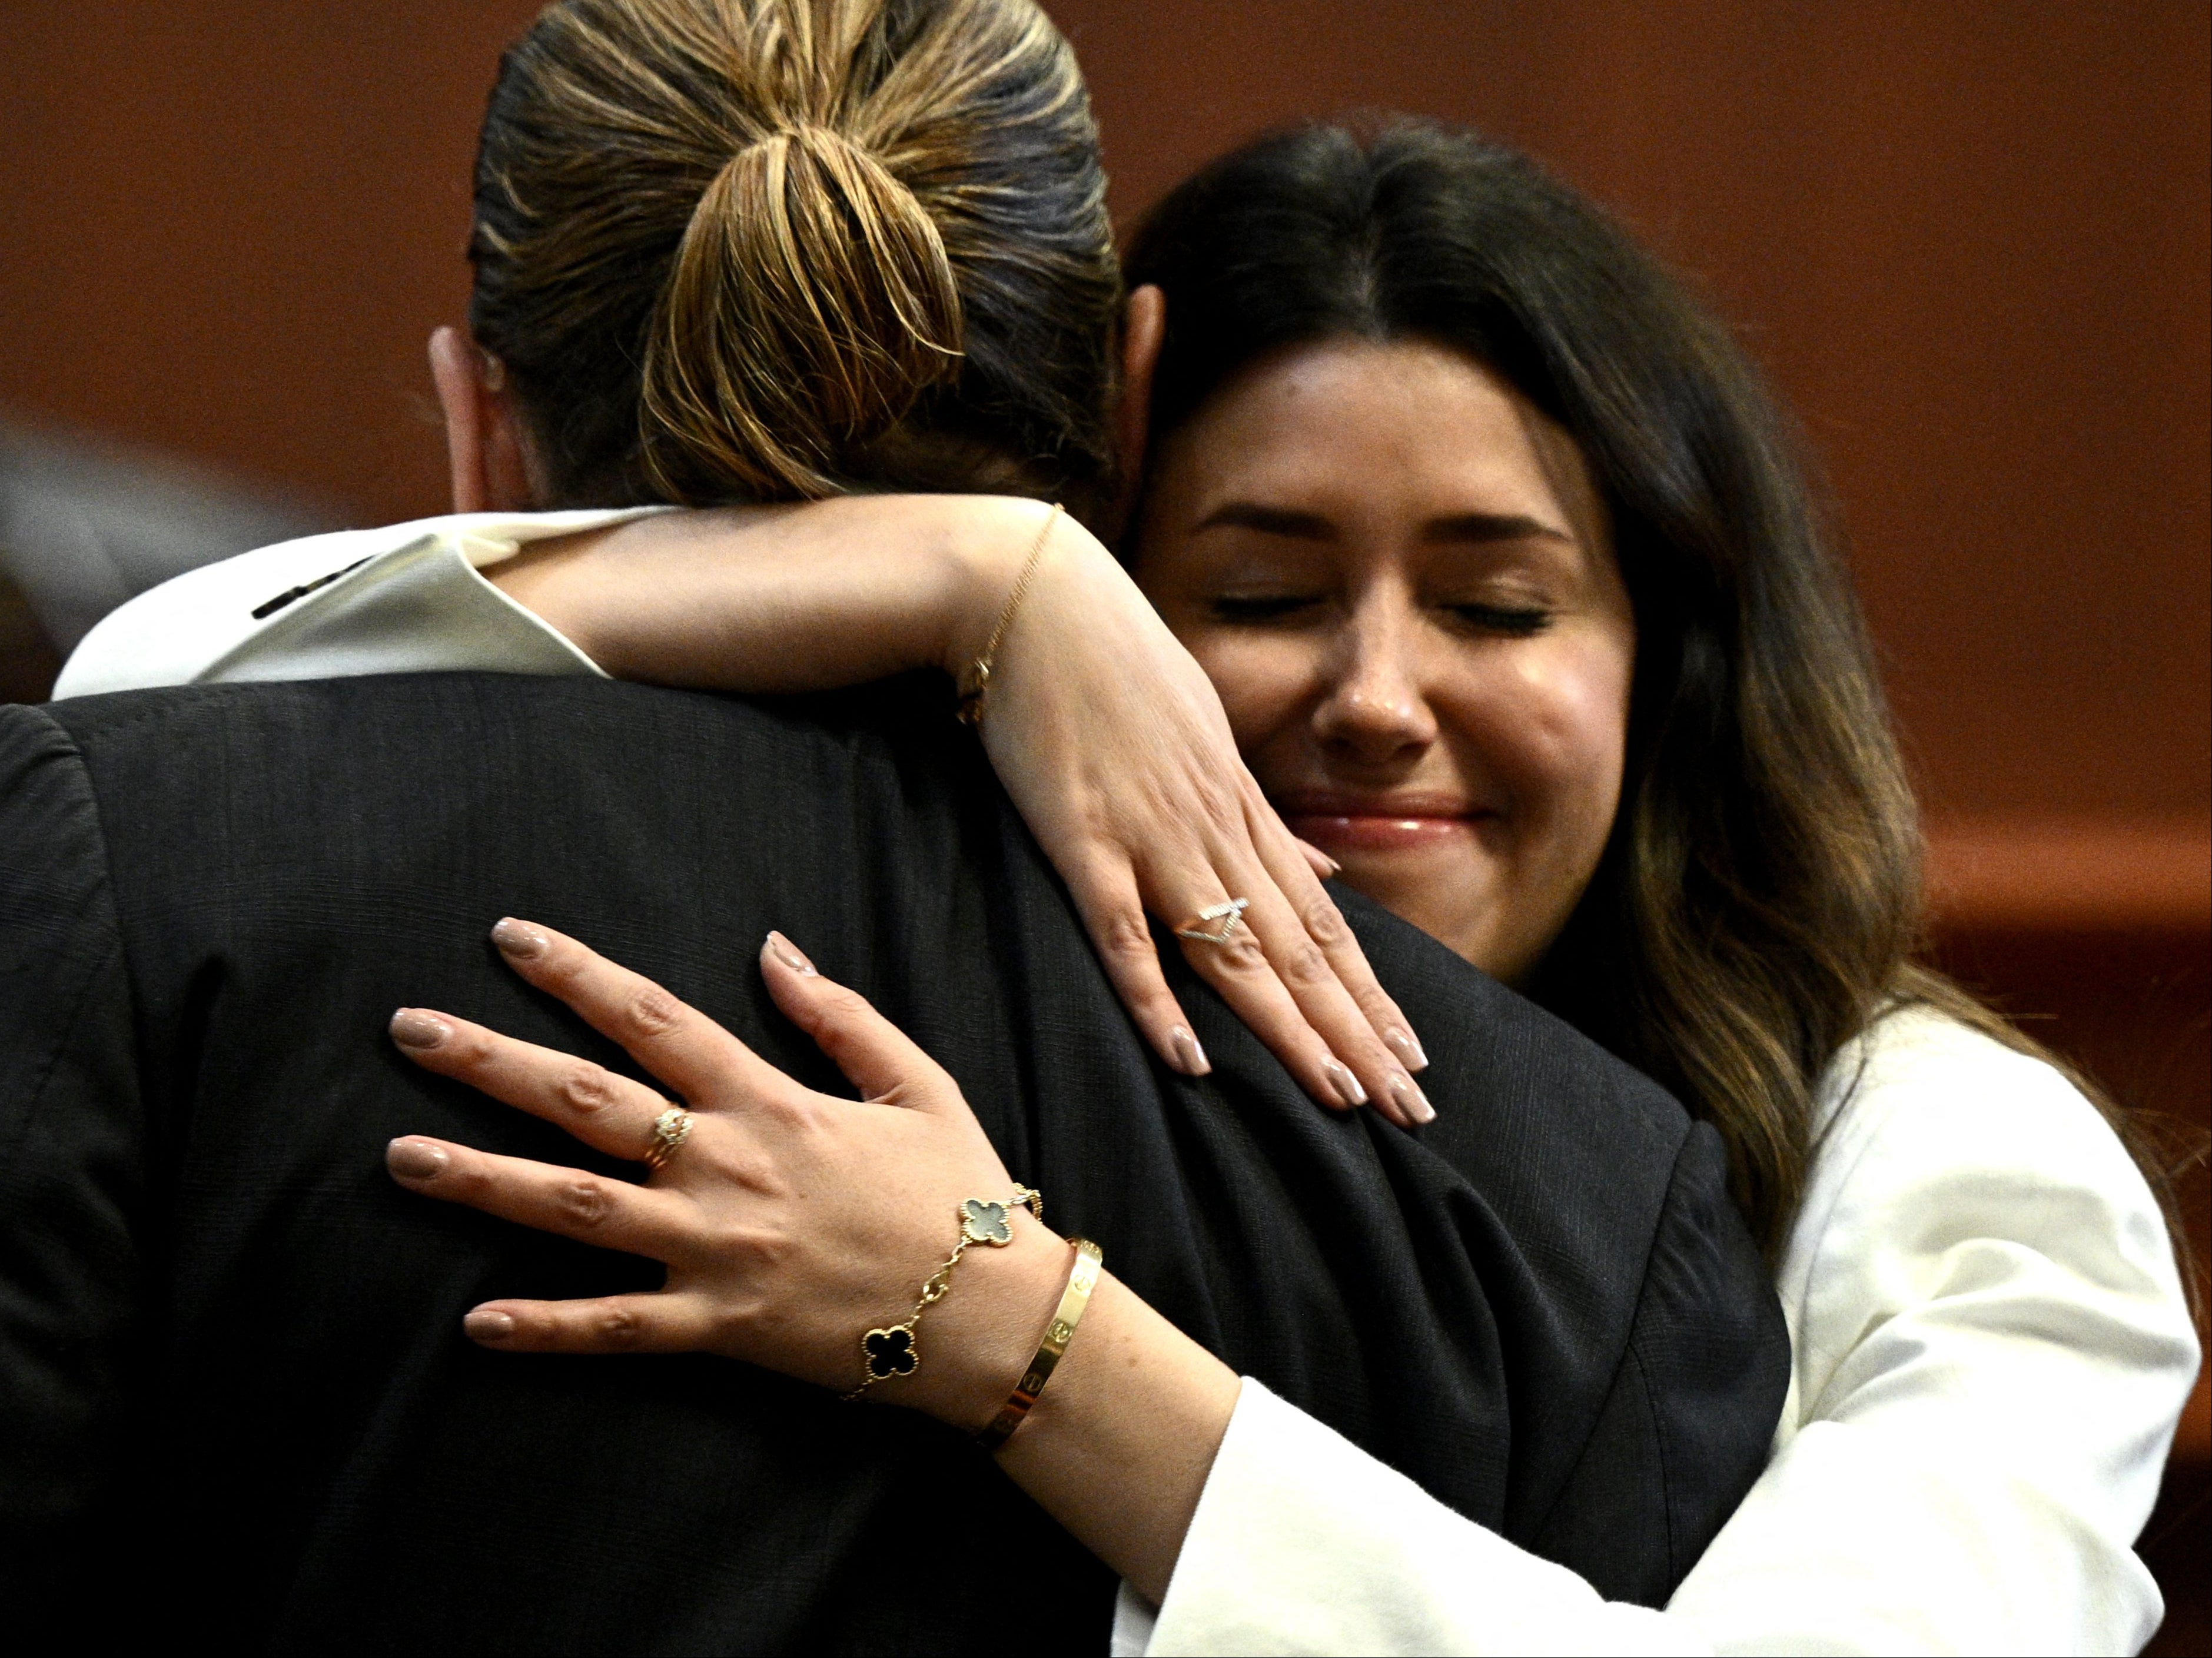 Camille Vasquez hugging Johnny Depp during the trial